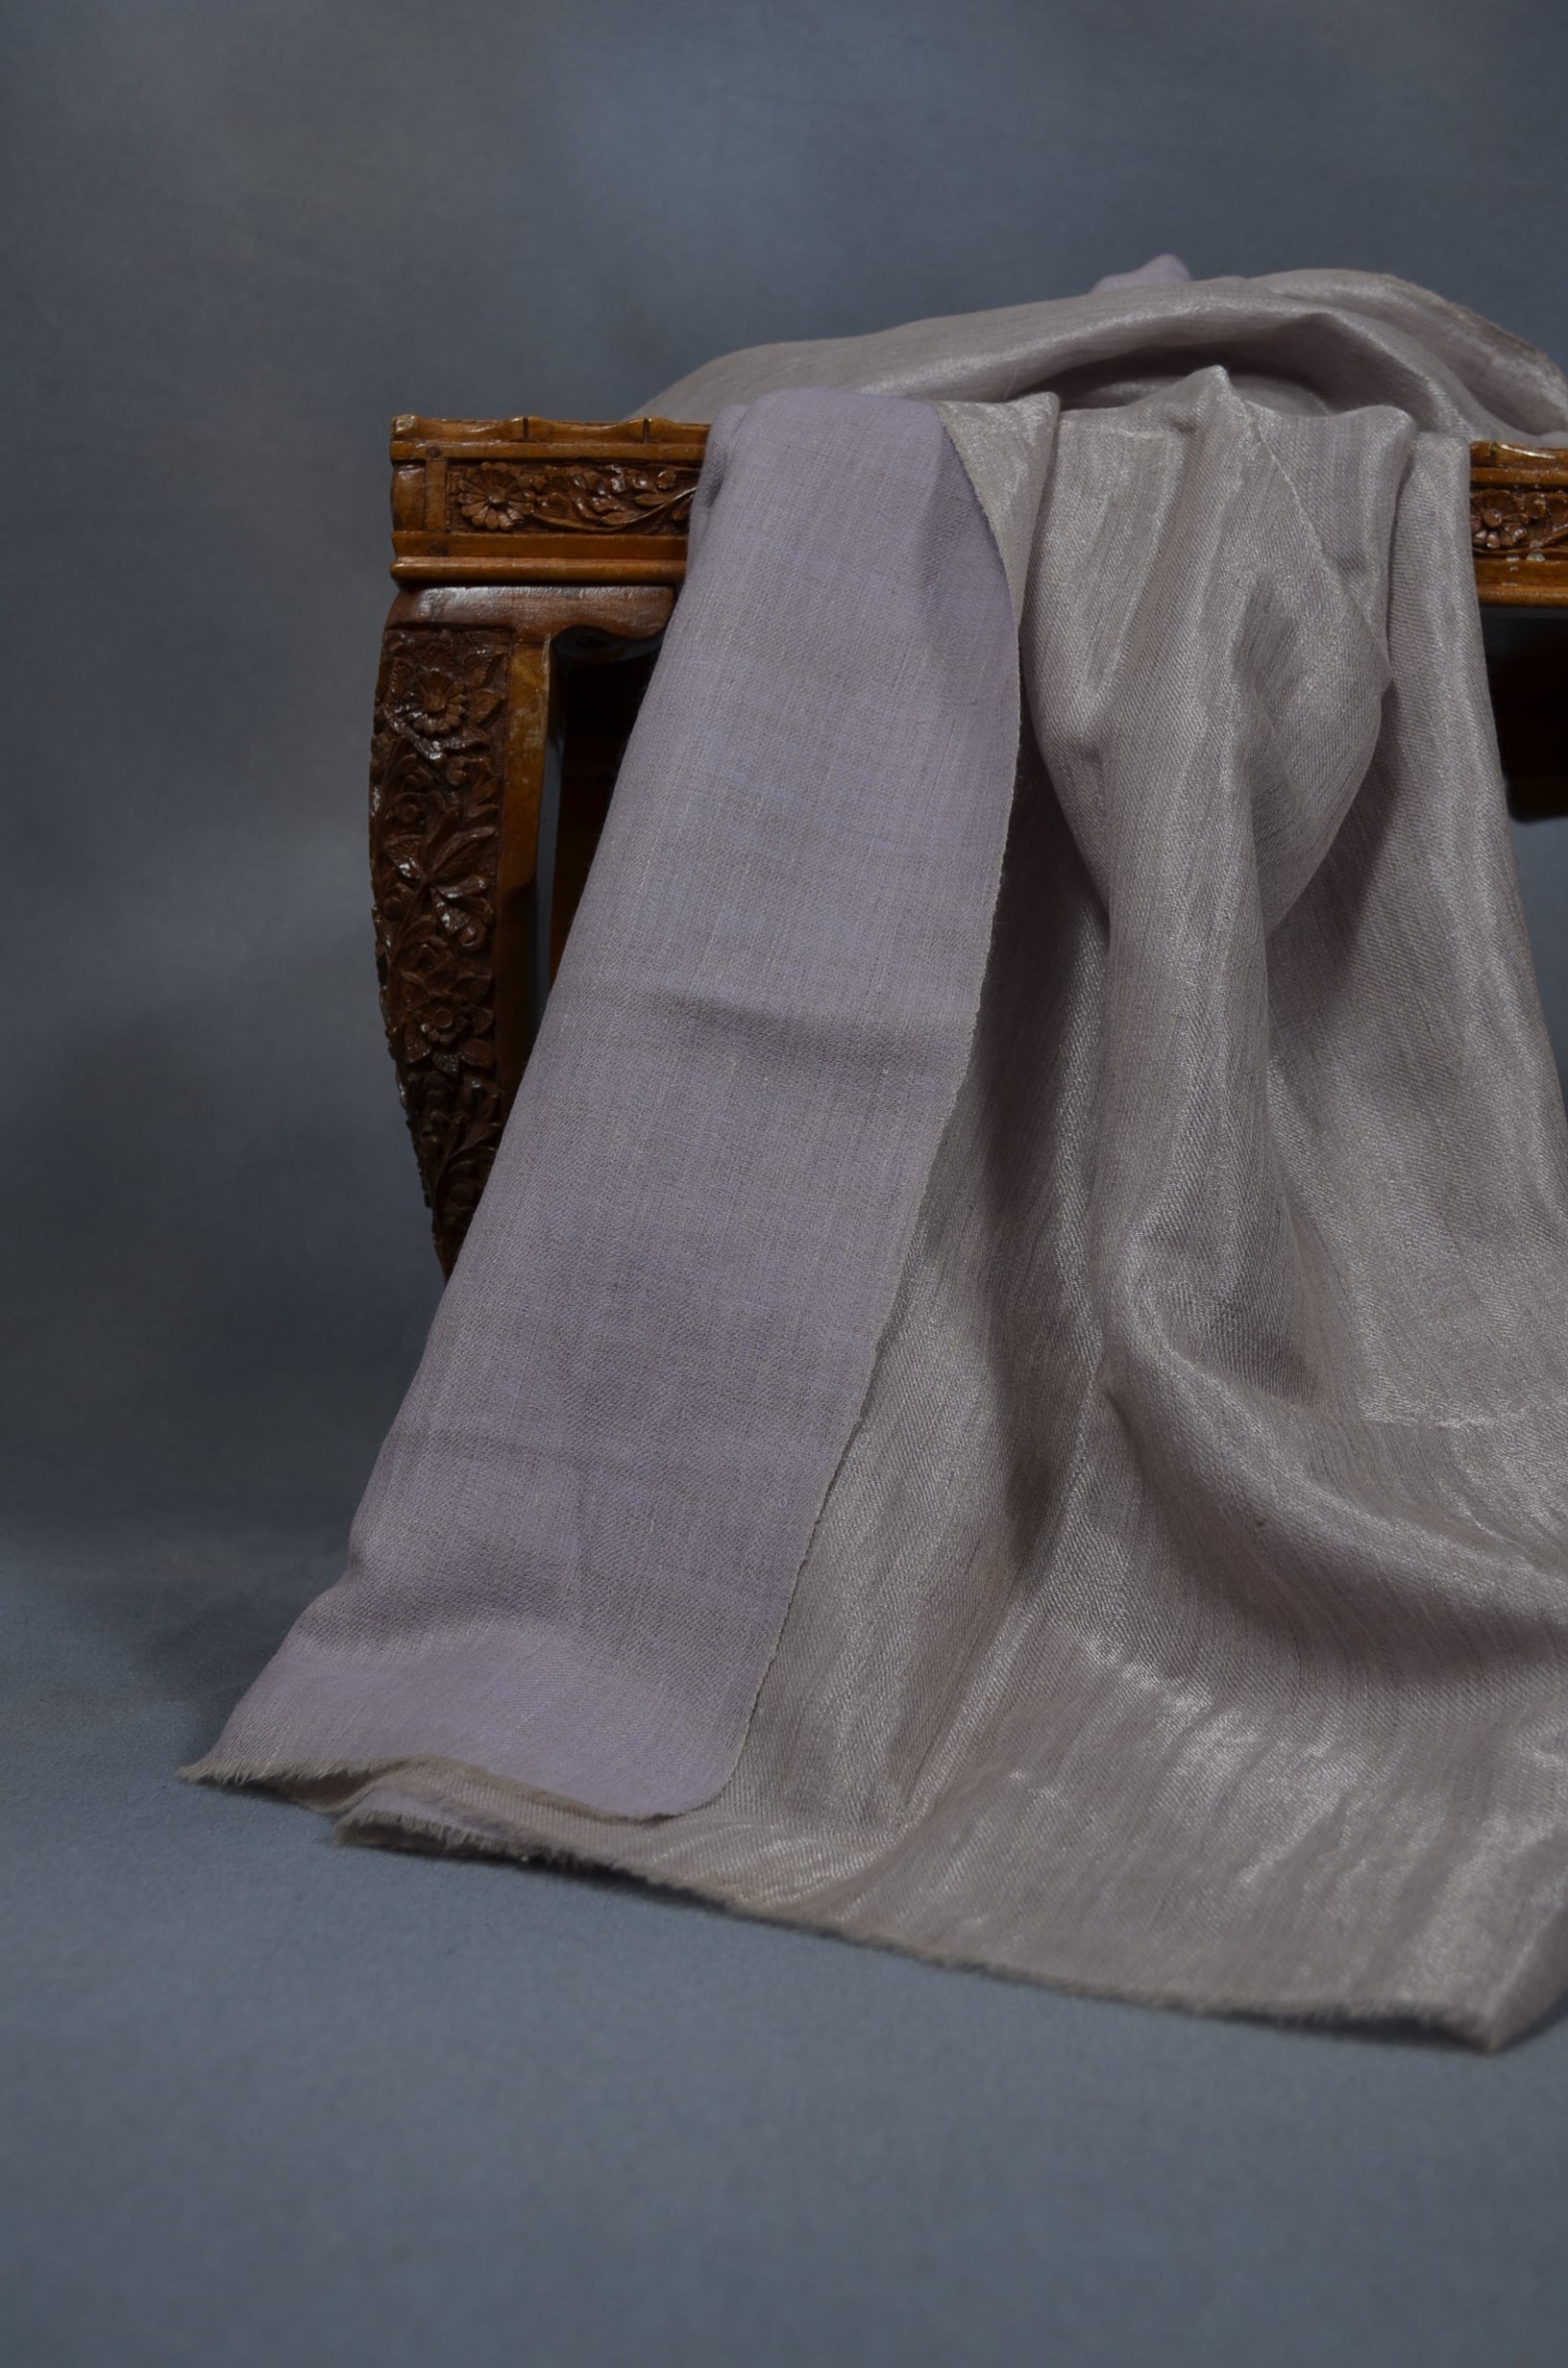 Reversible Lavender and Metallic Silver Handwoven Cashmere Pashmina Shawl